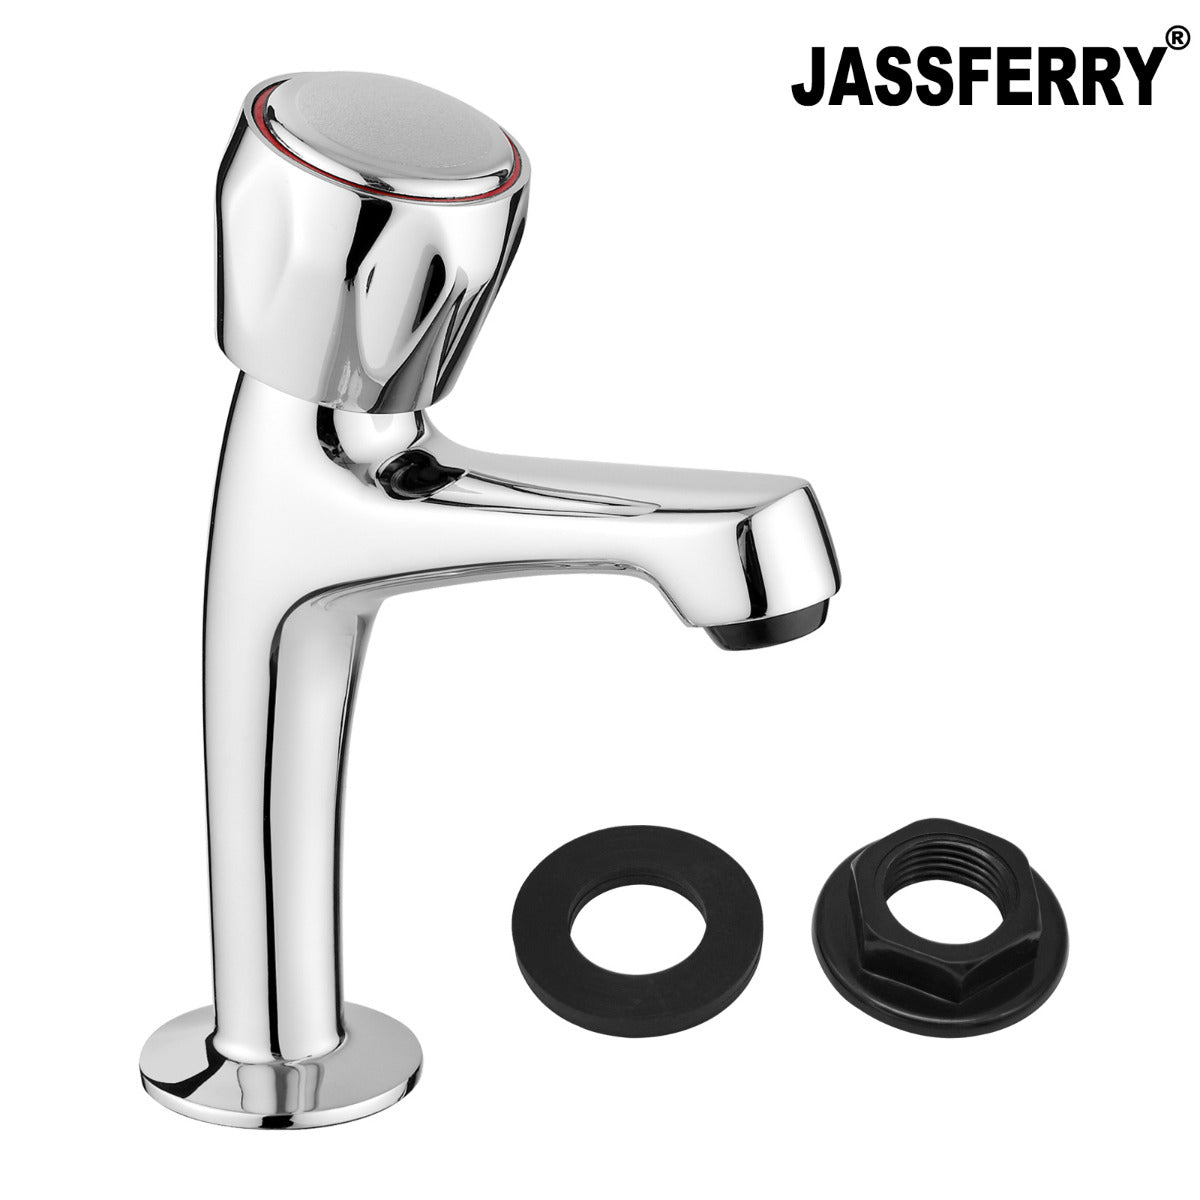 JassferryJASSFERRY Pair of Basin Taps Hot & Cold Water Bath Knob Handle High Neck ChromeBasin Taps